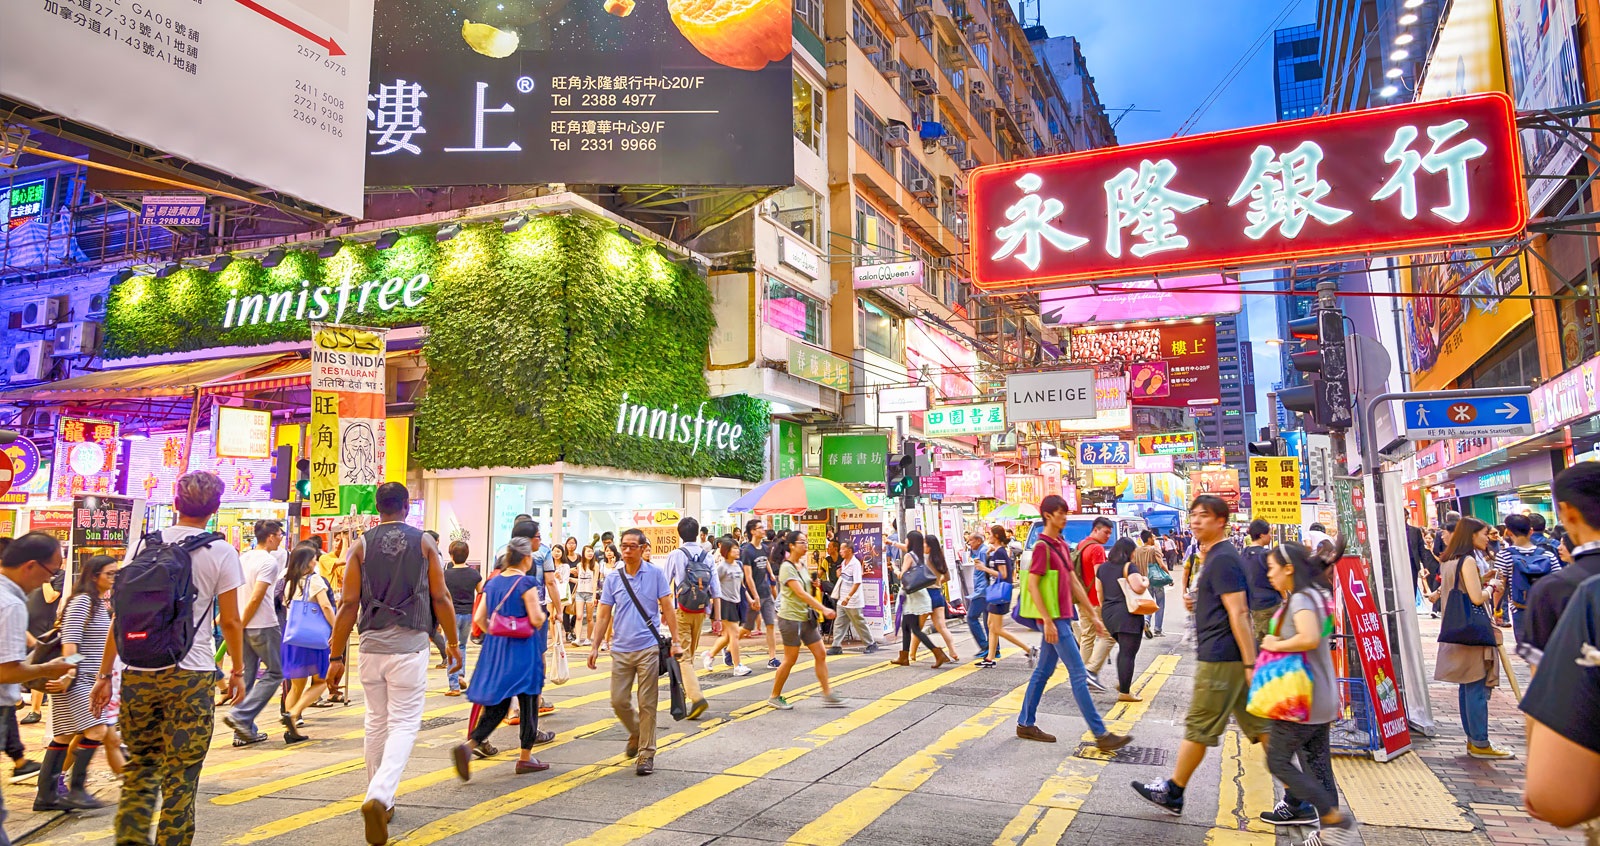 Hong Kong still among world’s most-visited cities